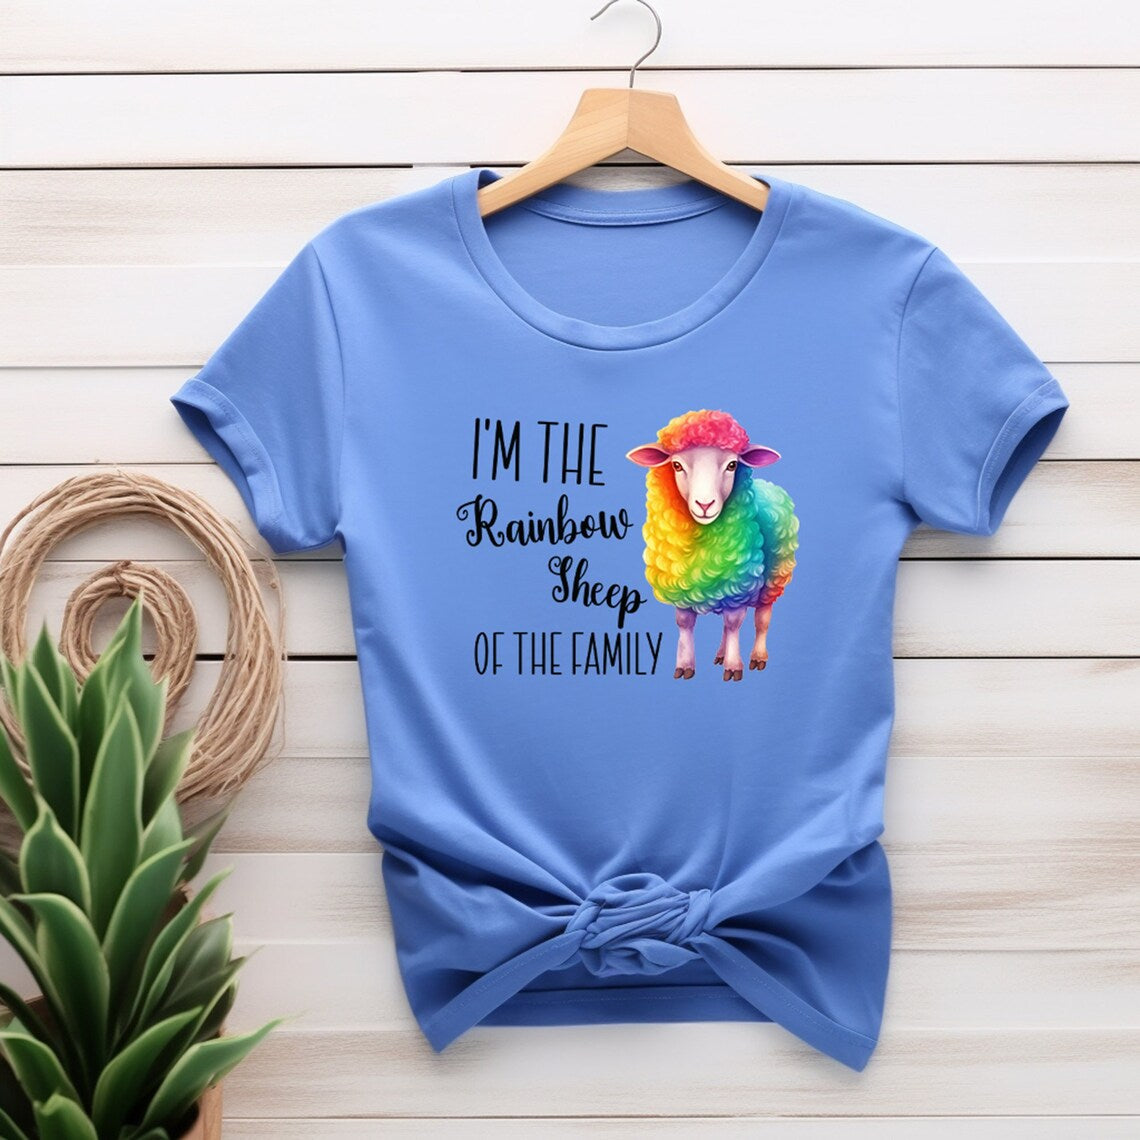 I'm the rainbow sheep of the family Shirt, Funny LGBT Tshirt, Colorful Sheep, LGBT Shirt, Pride Shirt, Trans Pride,Gay Pride Awareness